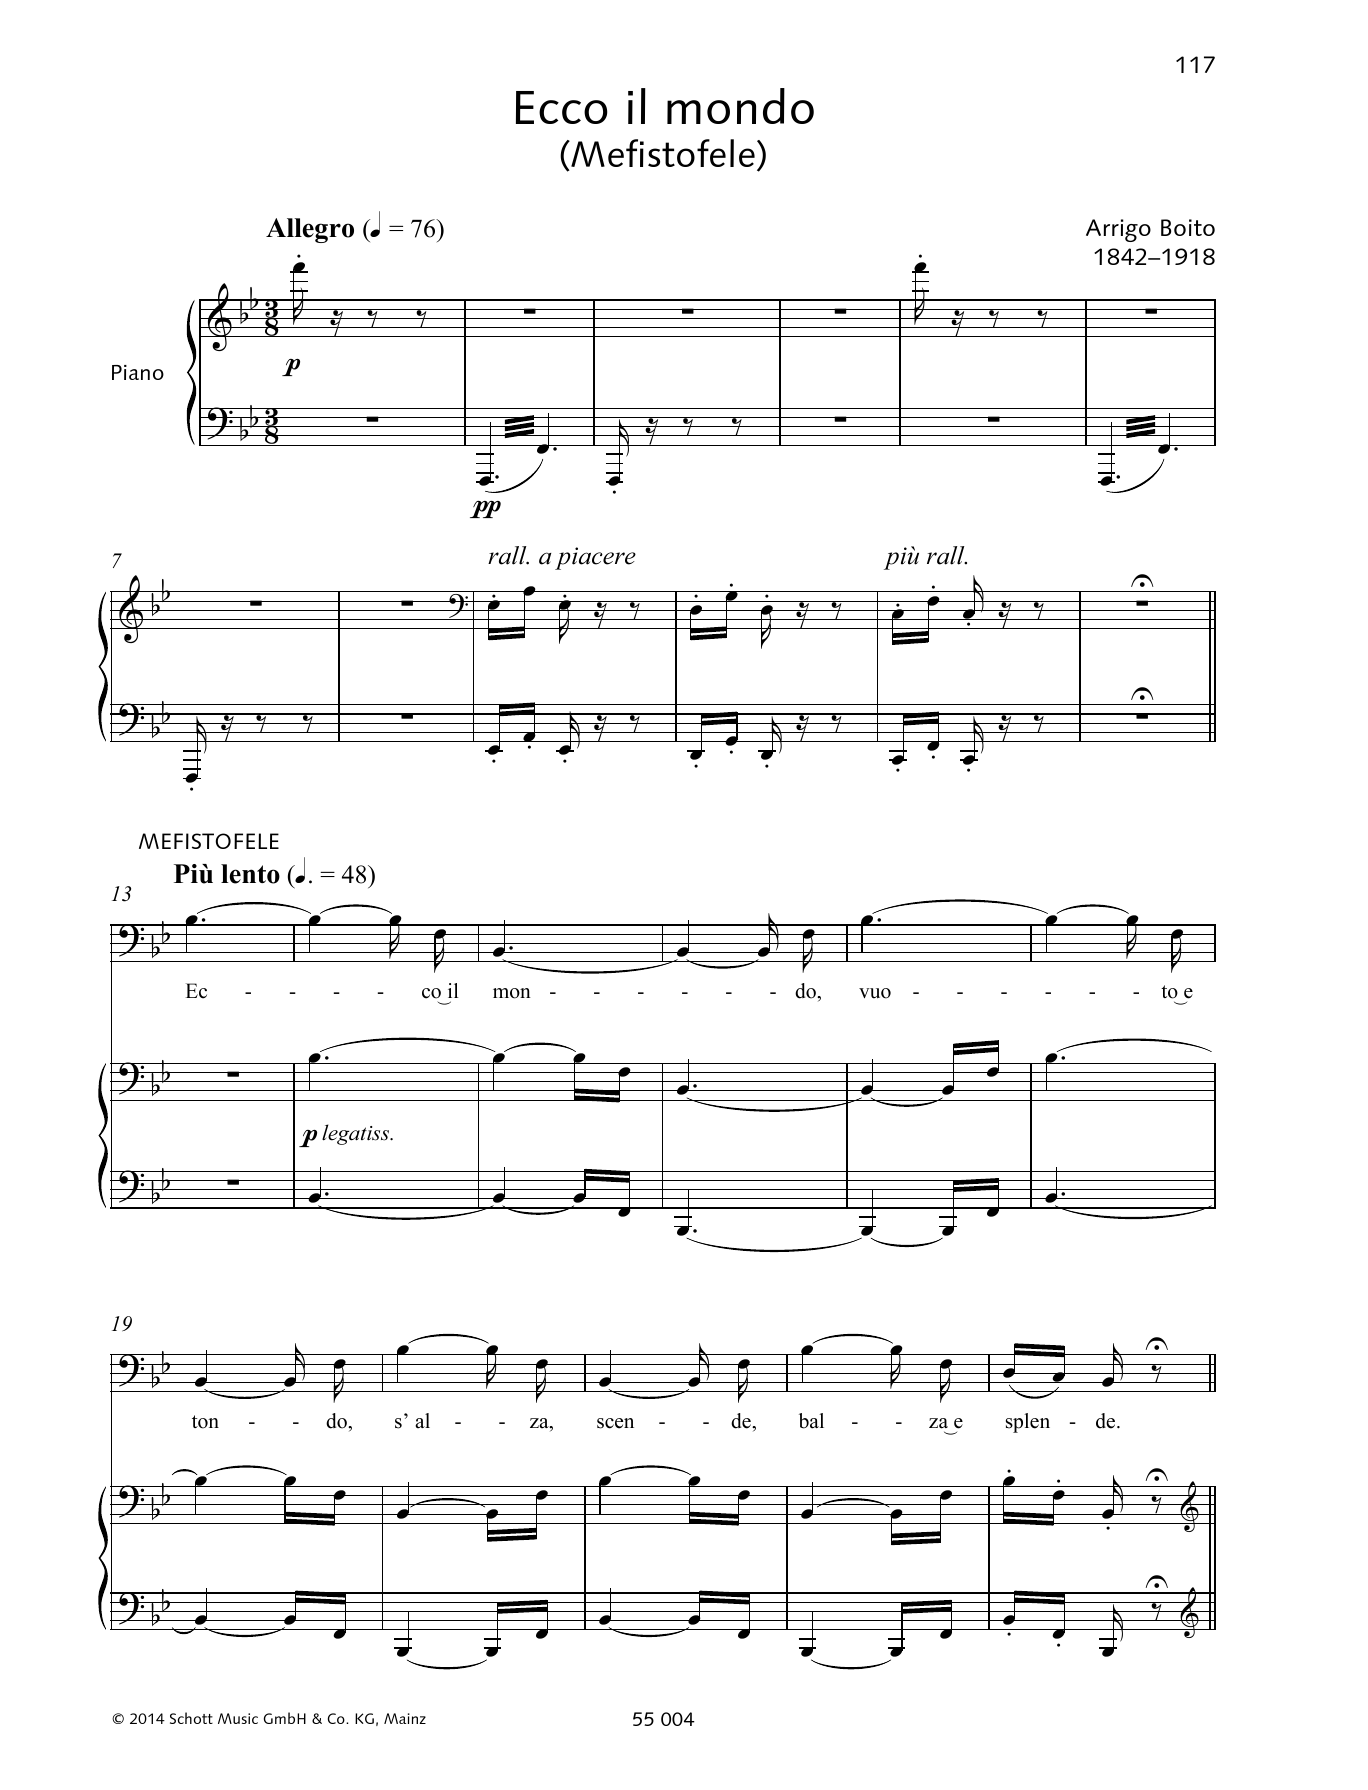 Arrigo Boito Ecco il mondo Sheet Music Notes & Chords for Piano & Vocal - Download or Print PDF